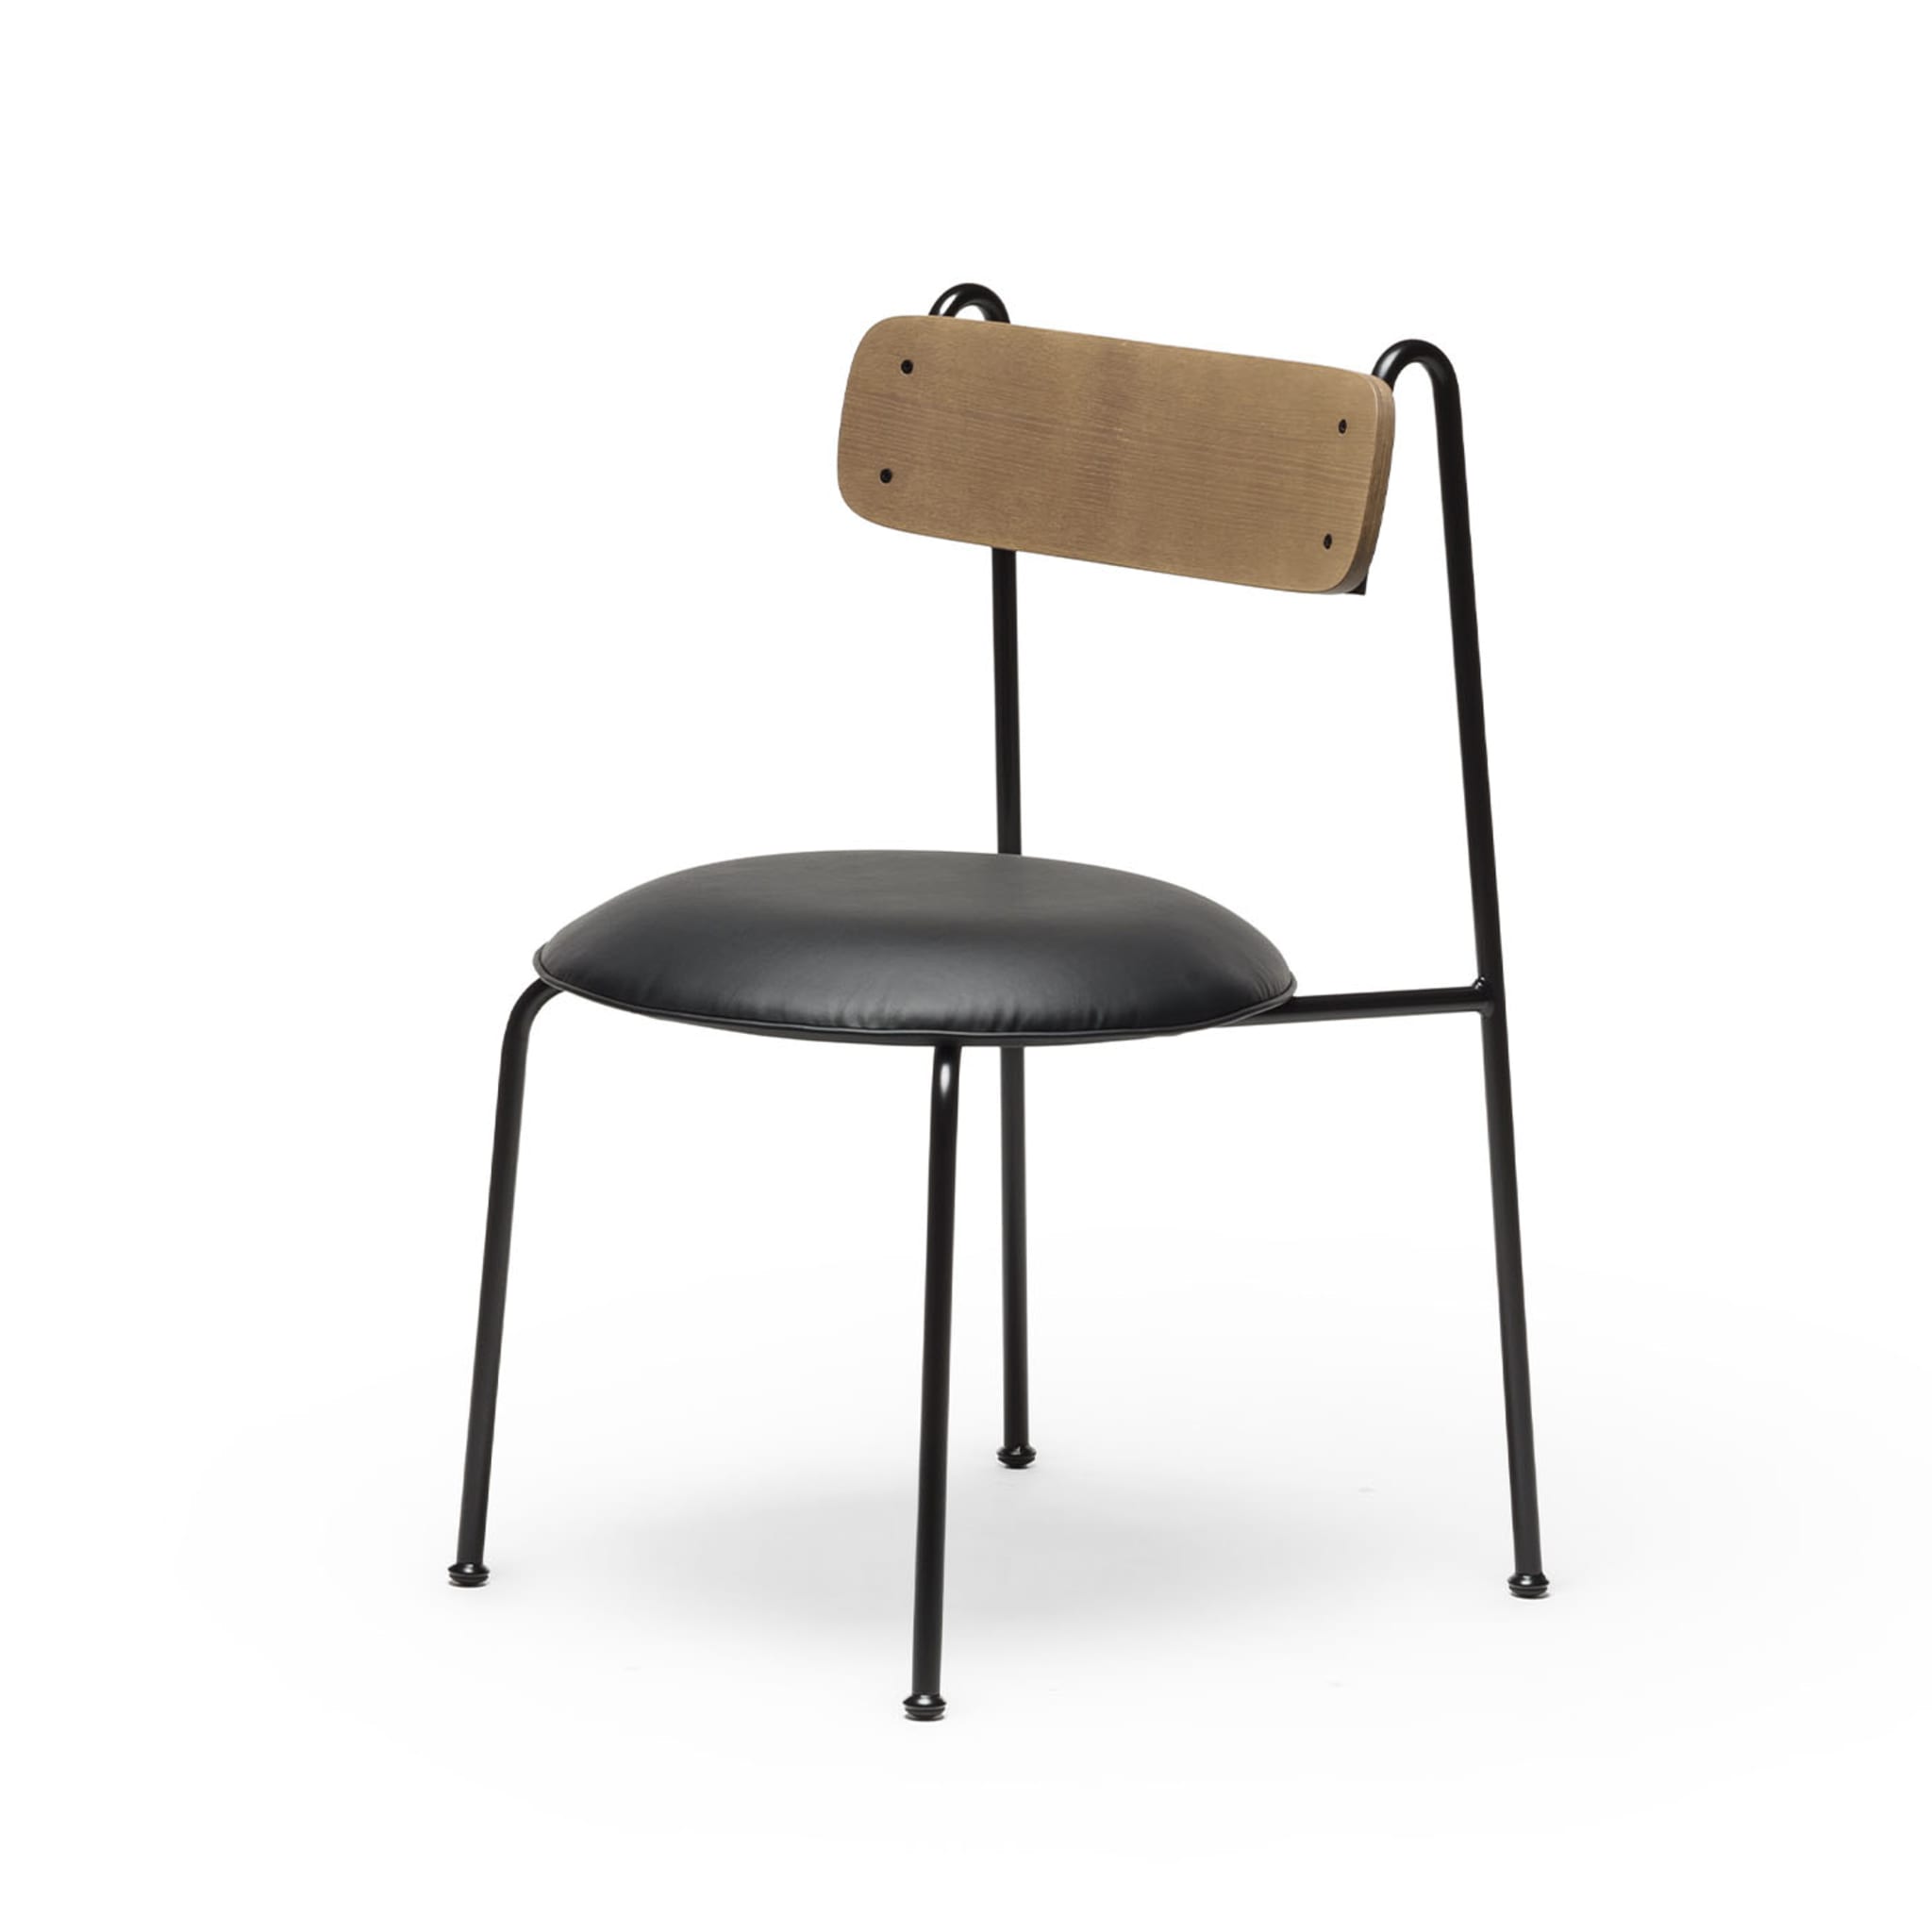 Lena S Black And Walnut Ash Chair By Designerd - Alternative view 3